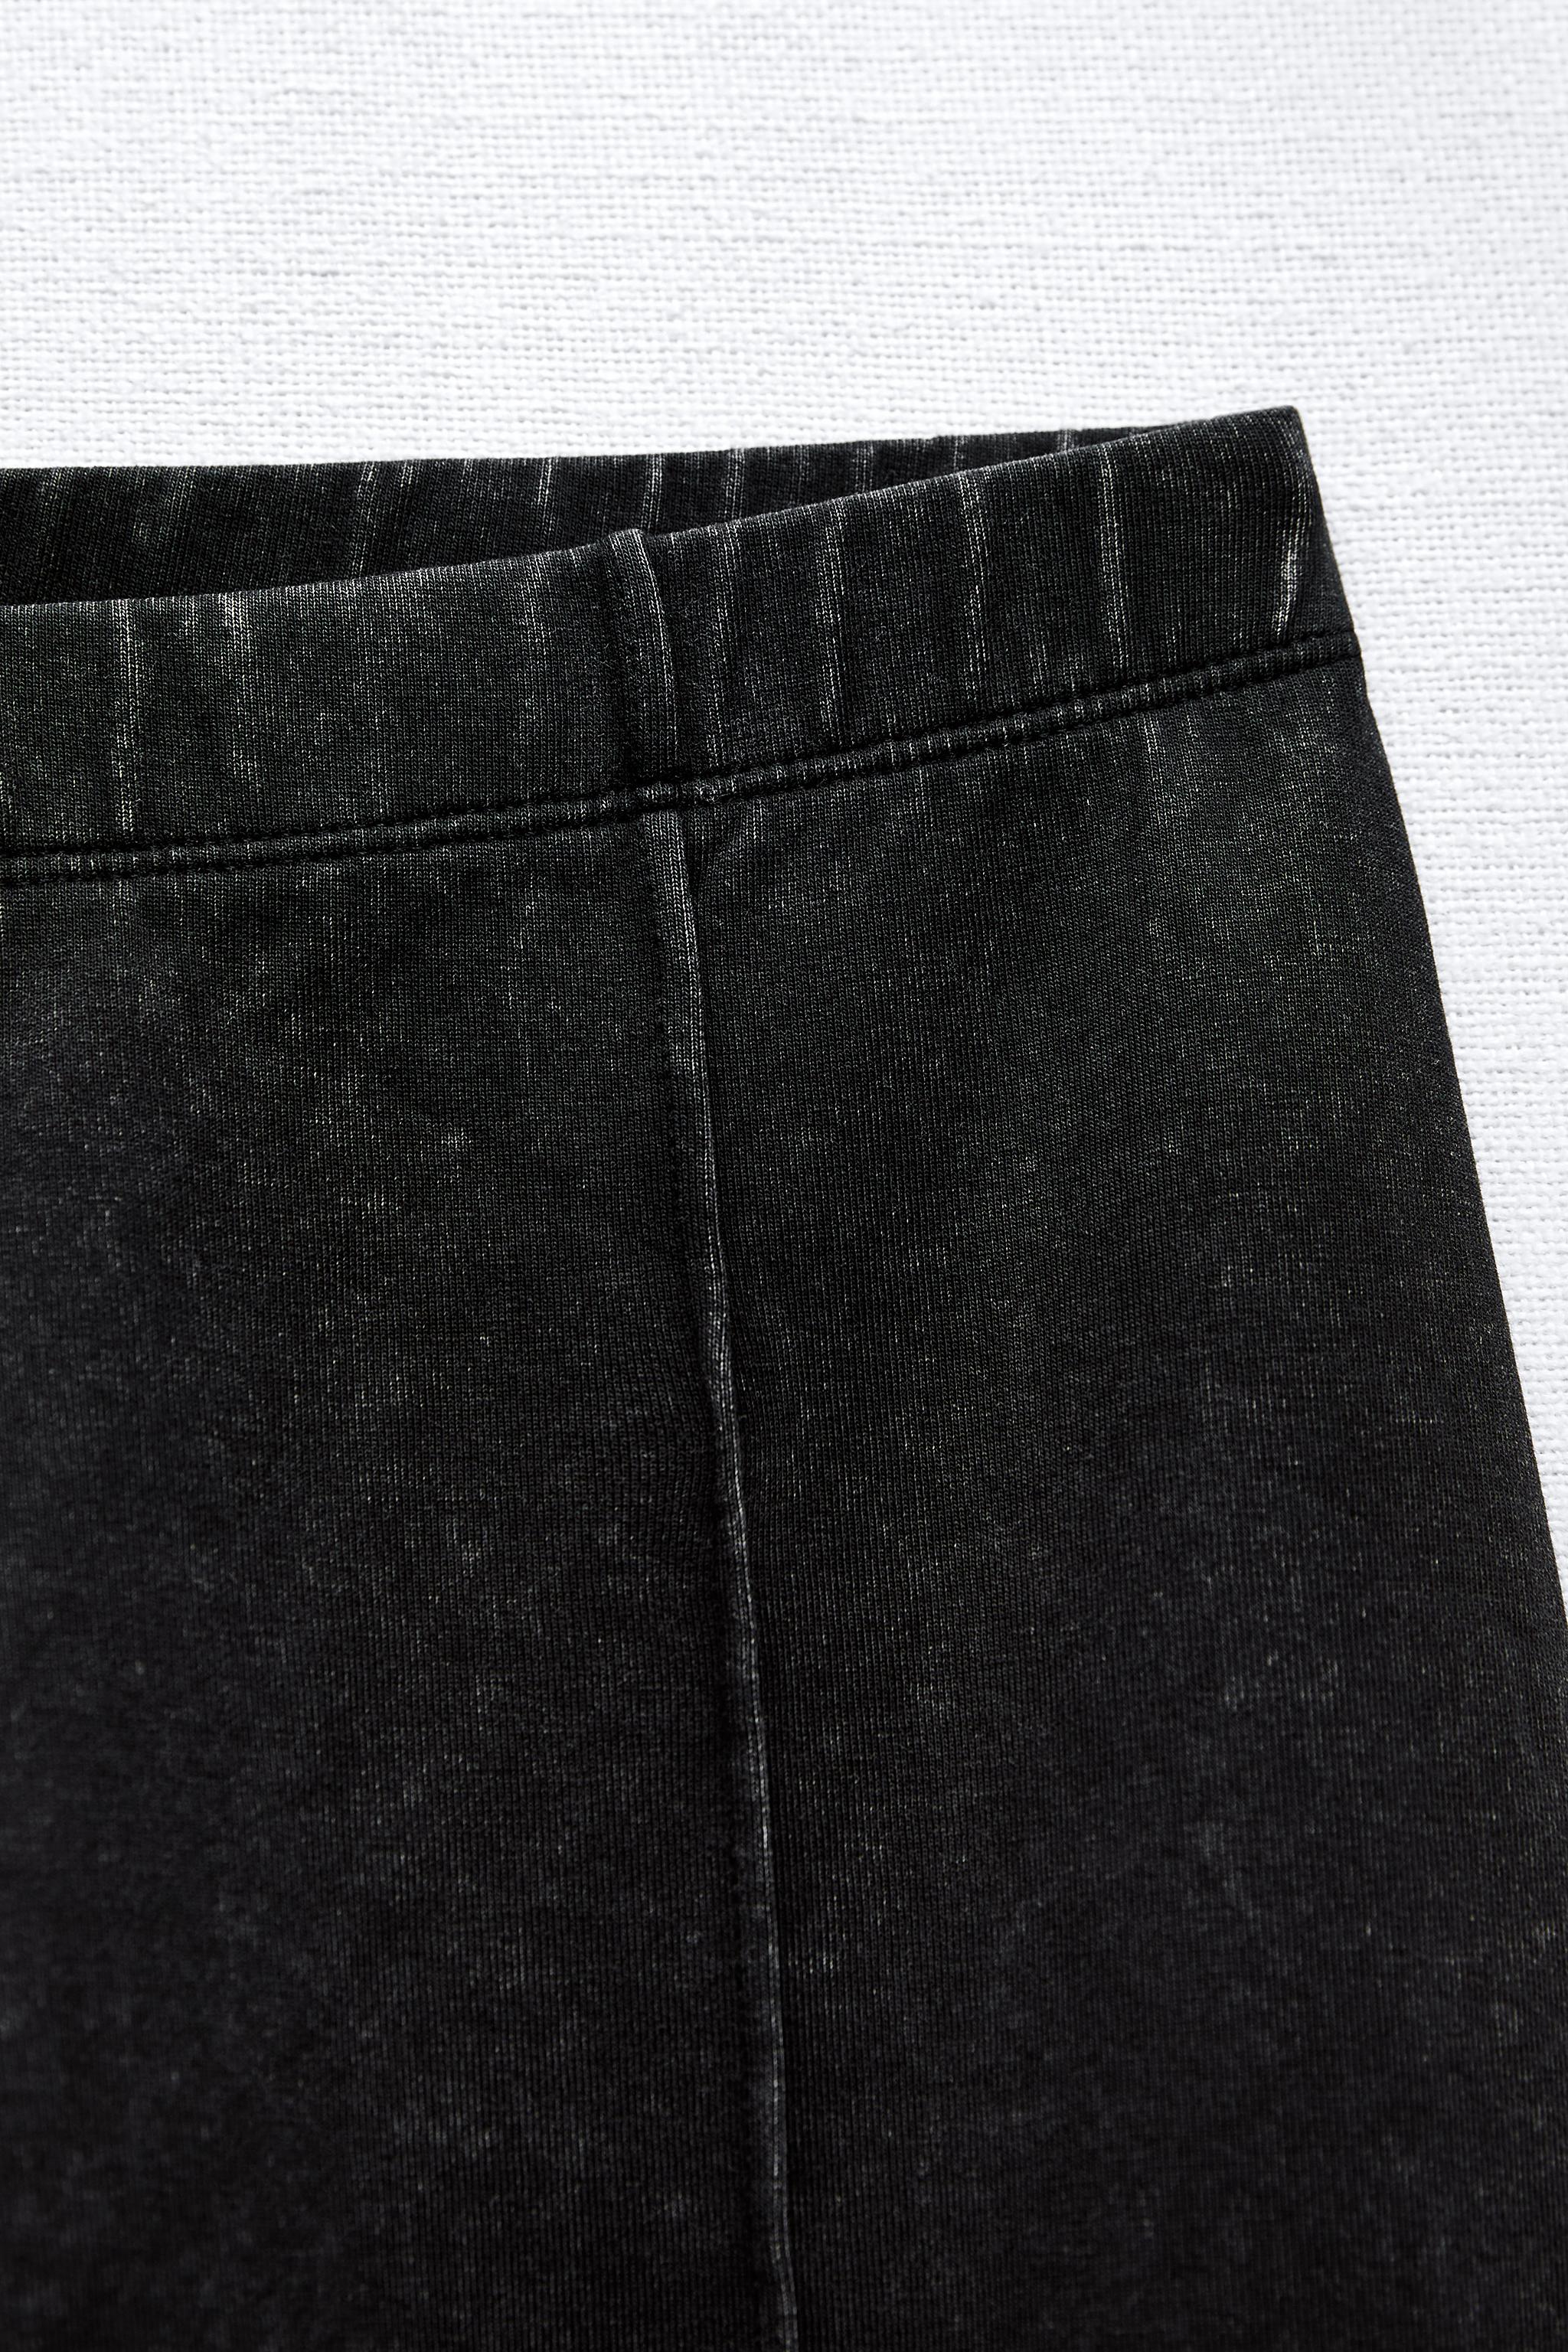 WASHED EFFECT FLARED INTERLOCK PANTS - Black